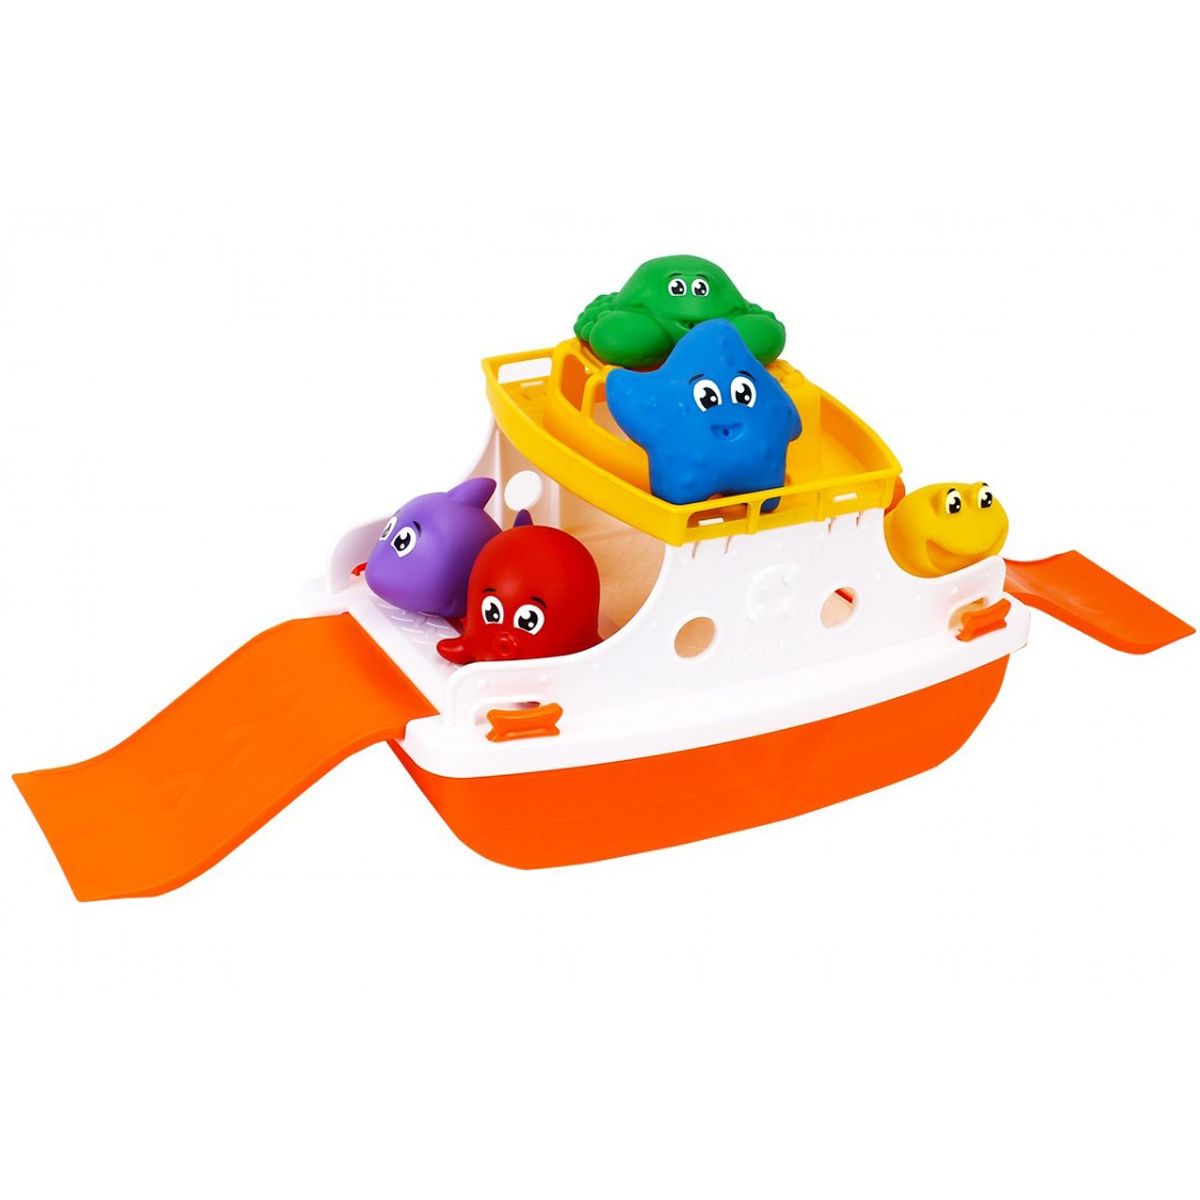 Игрушка "Паром" с резиновыми игрушками